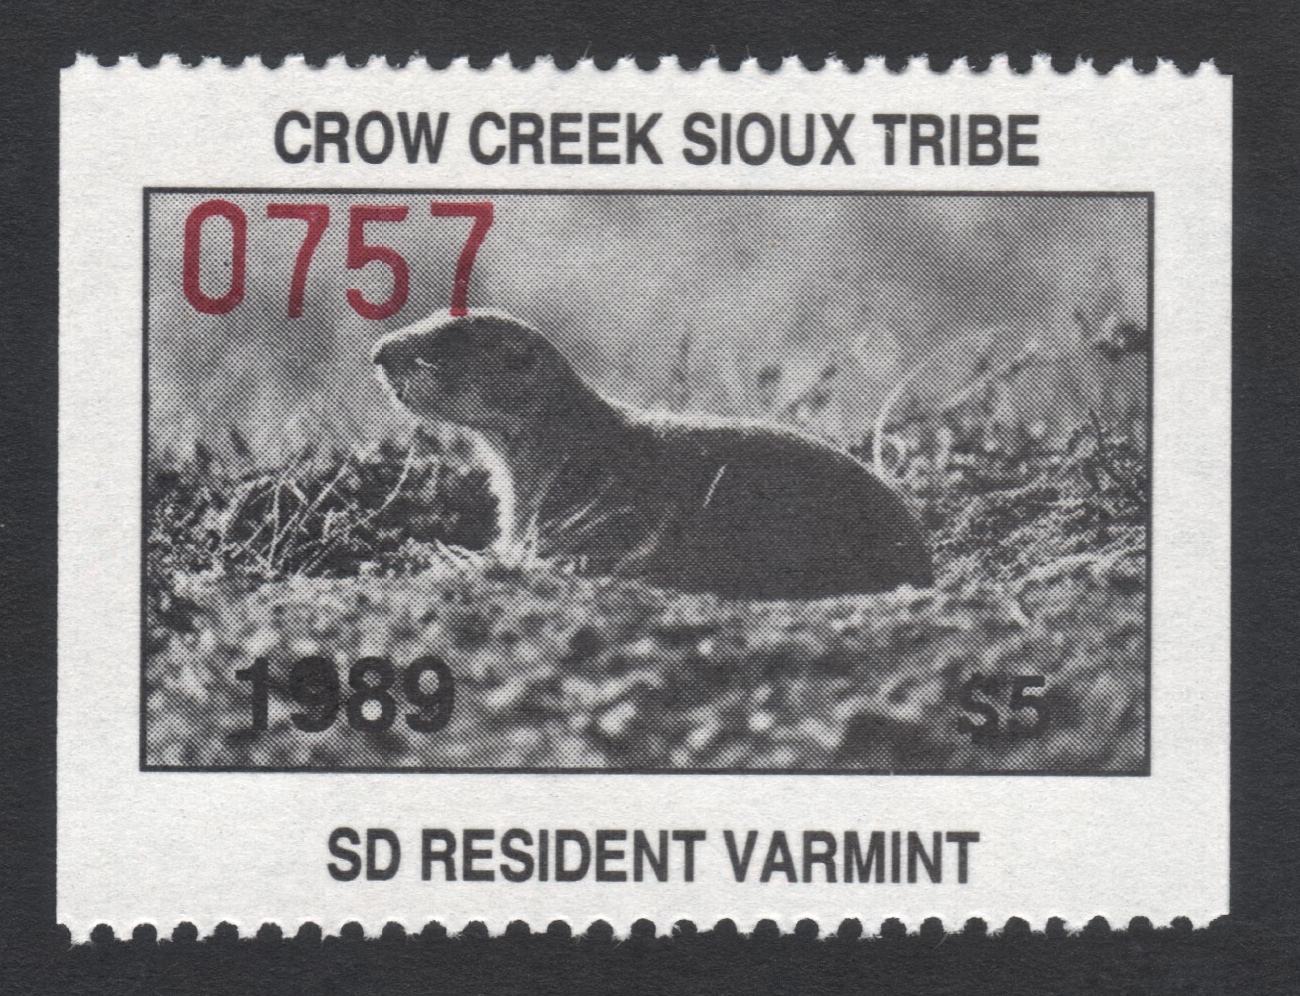 1989 Crow Creek SD Resident Varmint